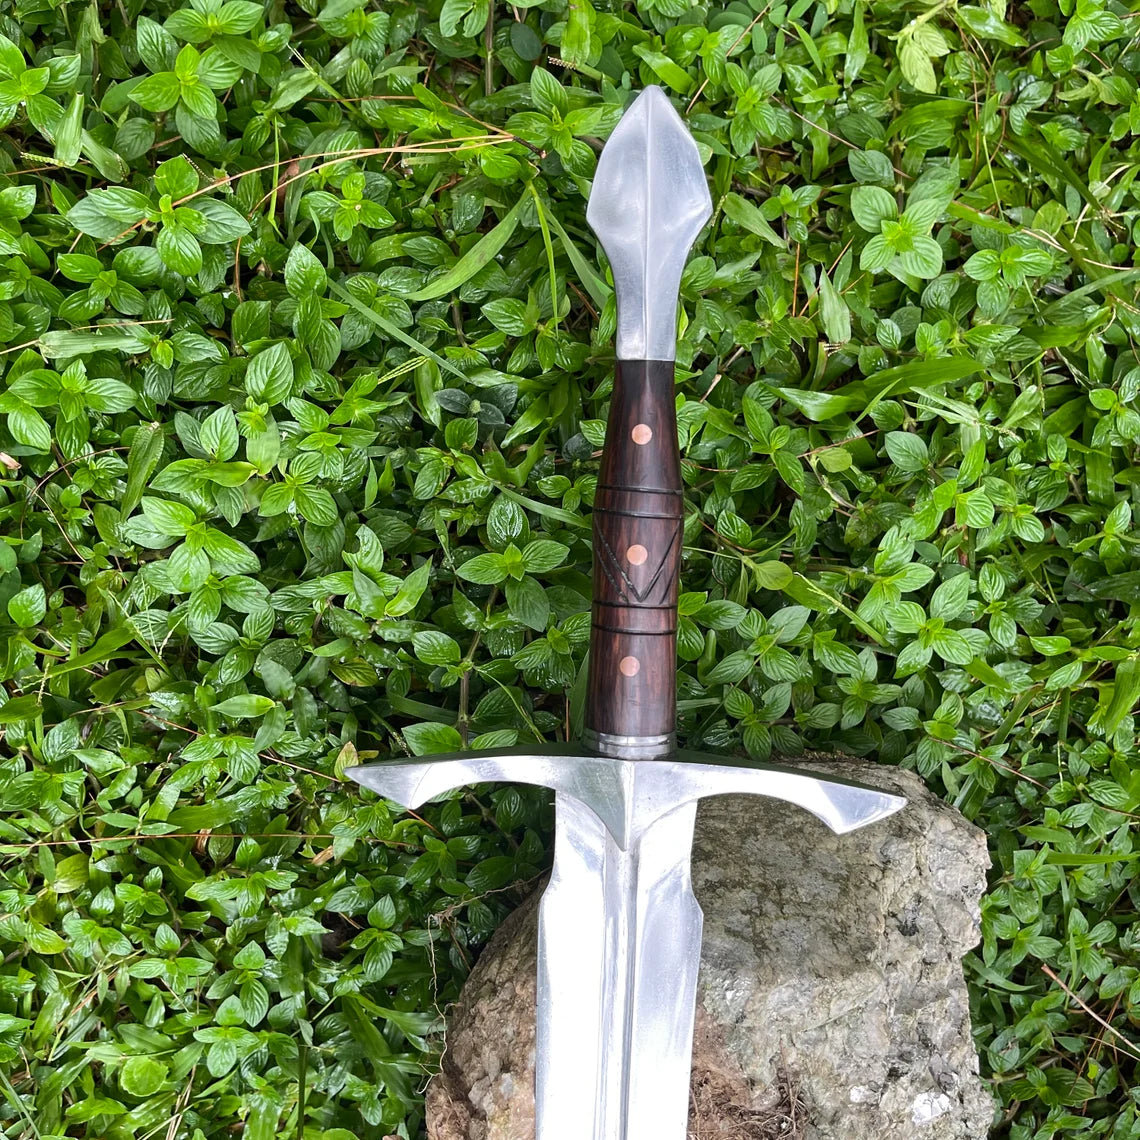 Sharpened Greek Hunting Sword-Handmade Battle Ready Balance Oil Tempered Knife-5160 Carbon Steel